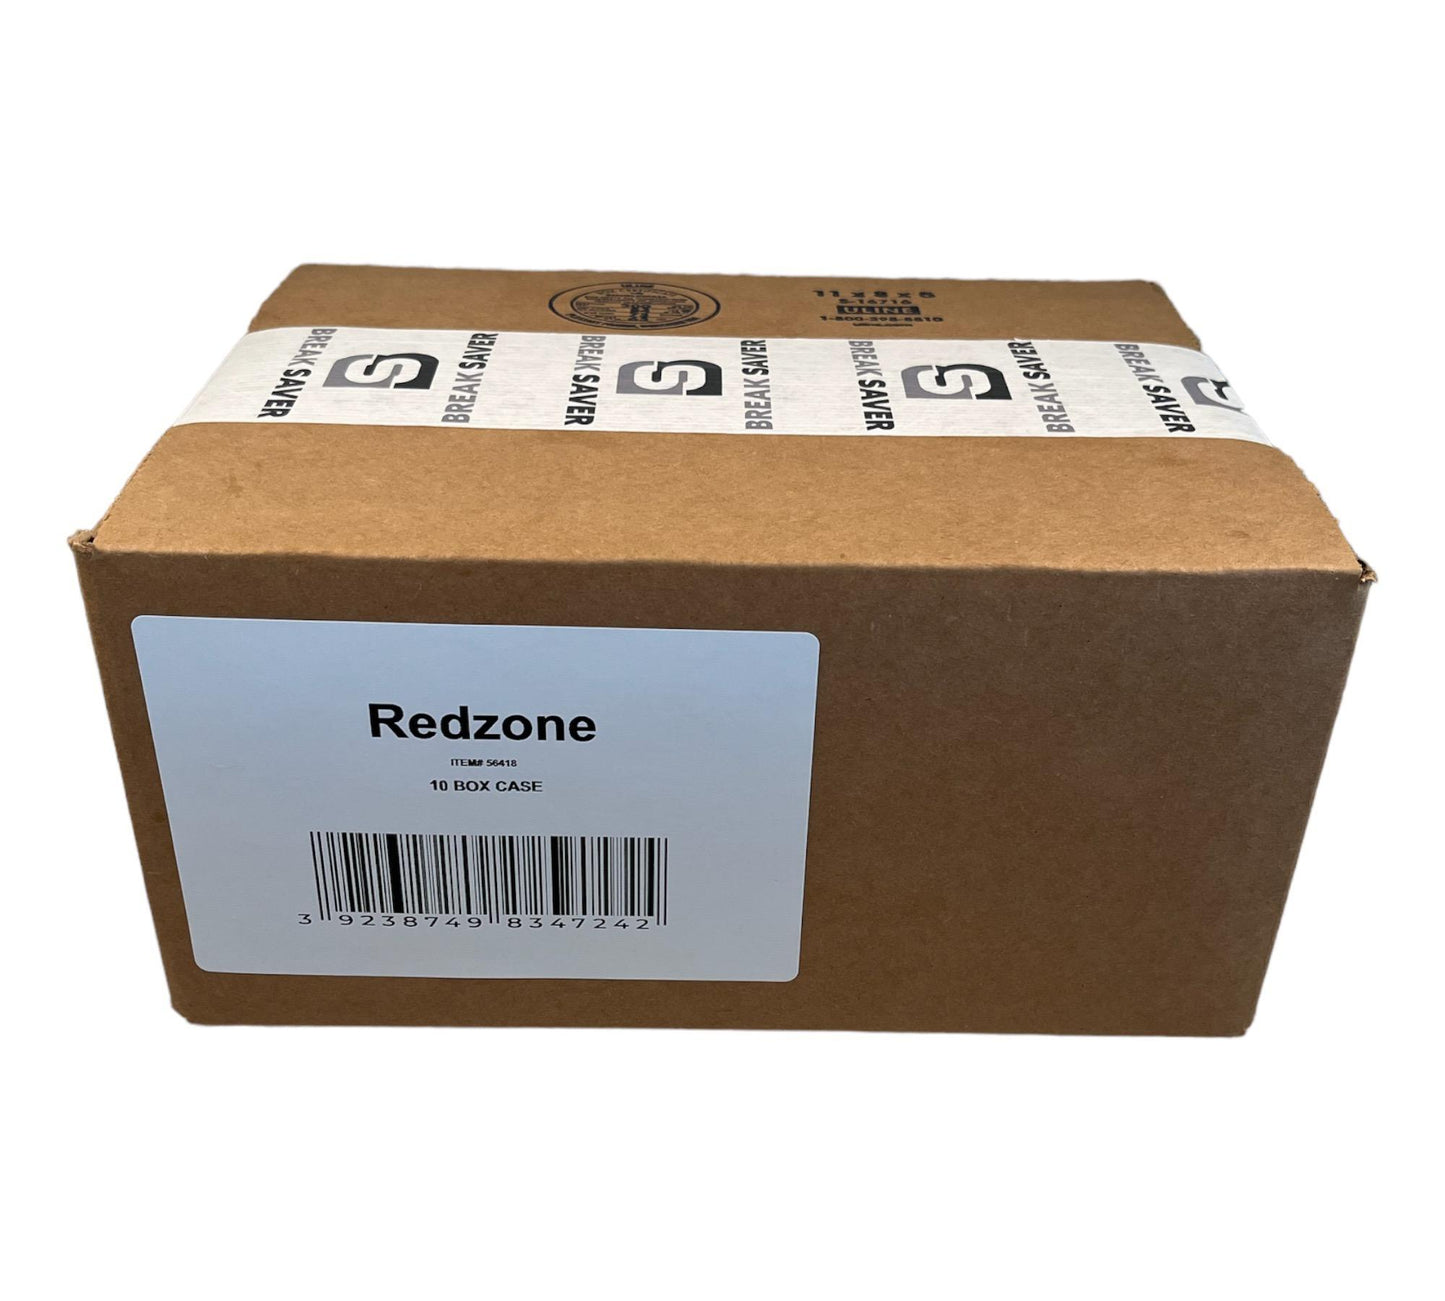 BREAKSAVER REDZONE 10 BOX CASE